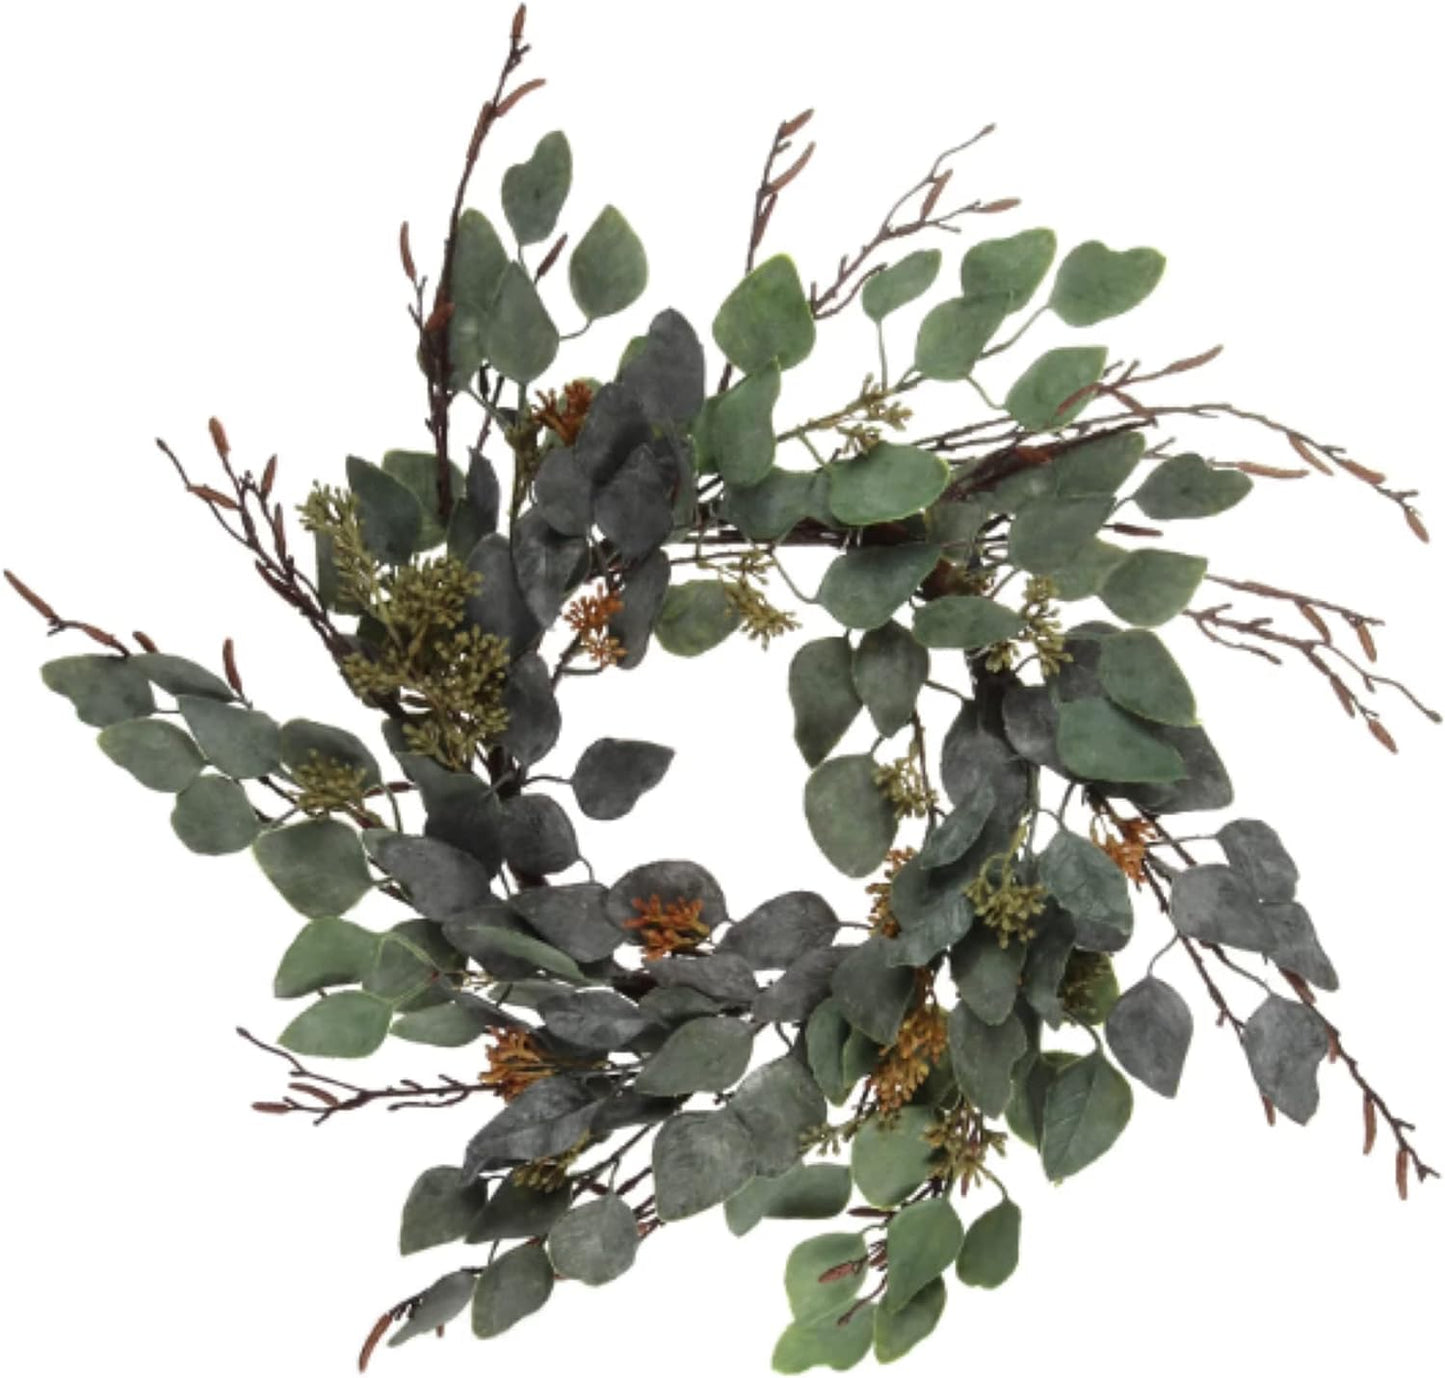 24" Eucalyptus Wreath - Lush Greenery Front Door Decor, Handcrafted, Indoor/Outdoor, All-Season, Elegant Welcome Accent for Home & Patio